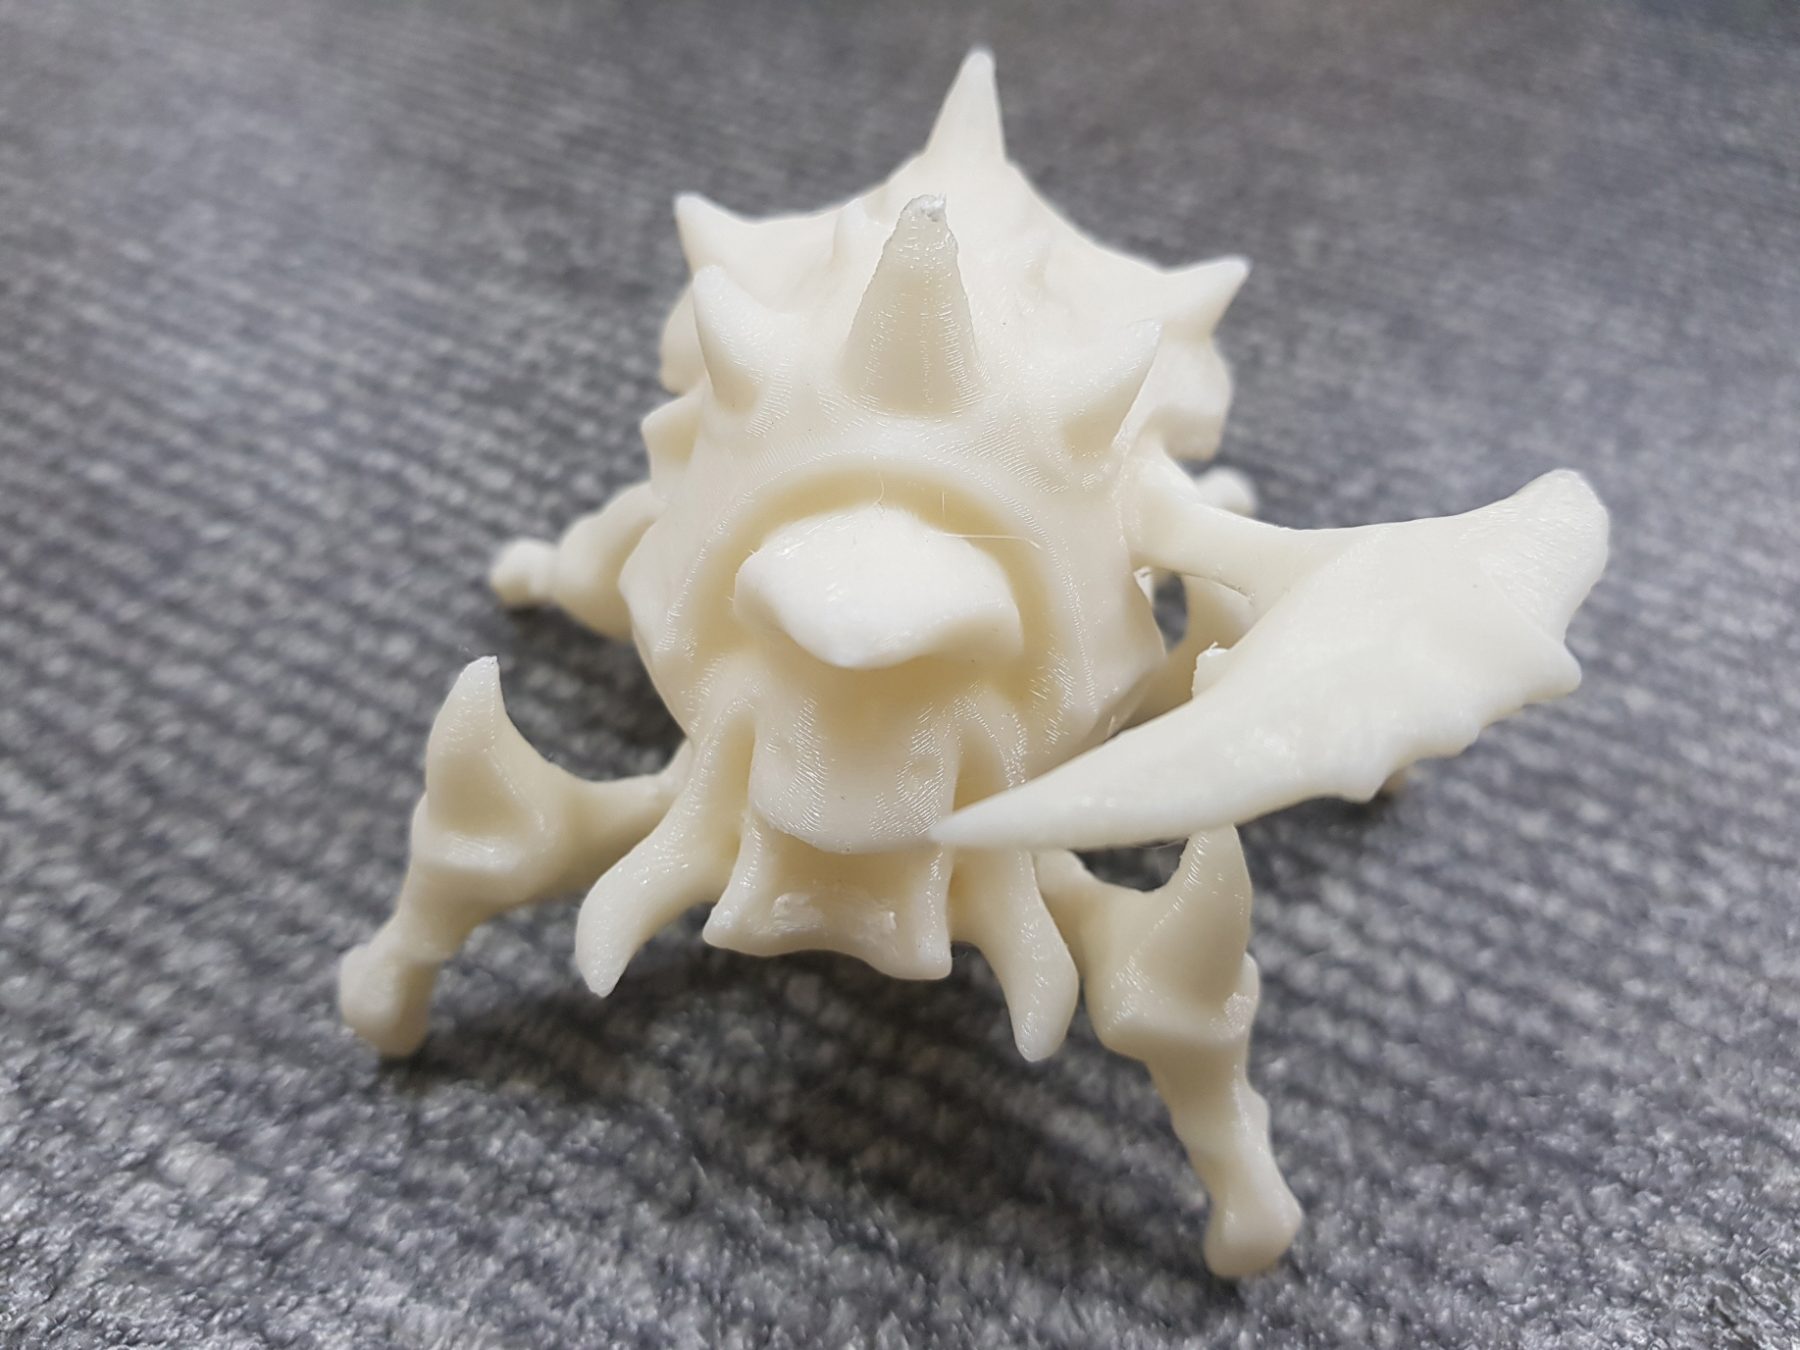 3D Printed Roach Figurine